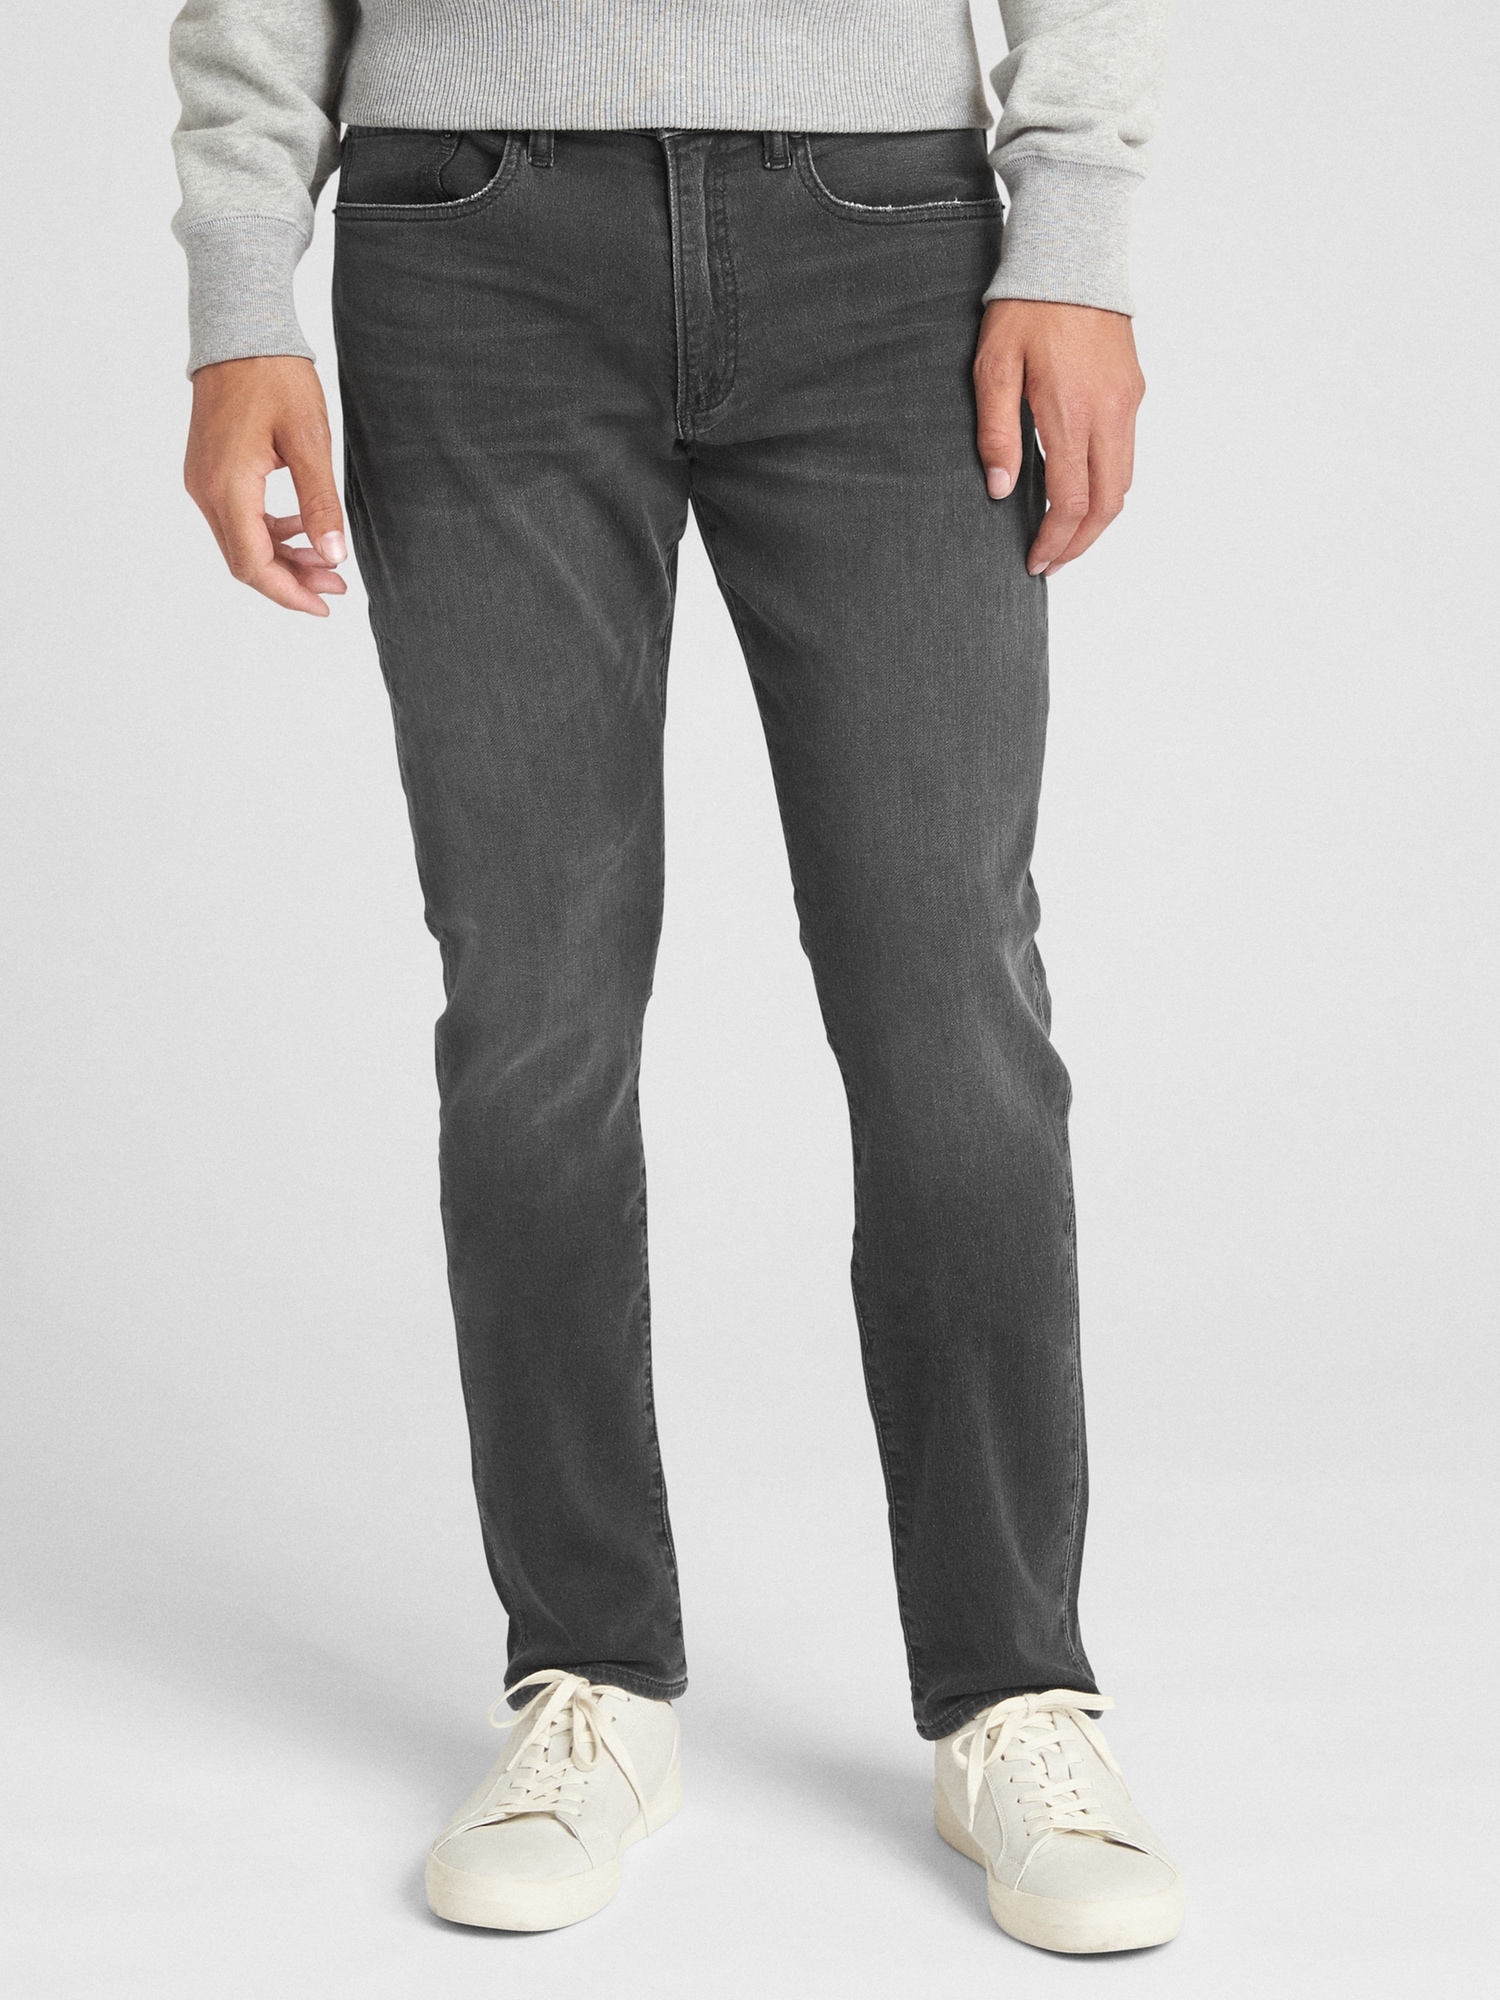 Soft Wear Slim Jeans with GapFlex | Gap